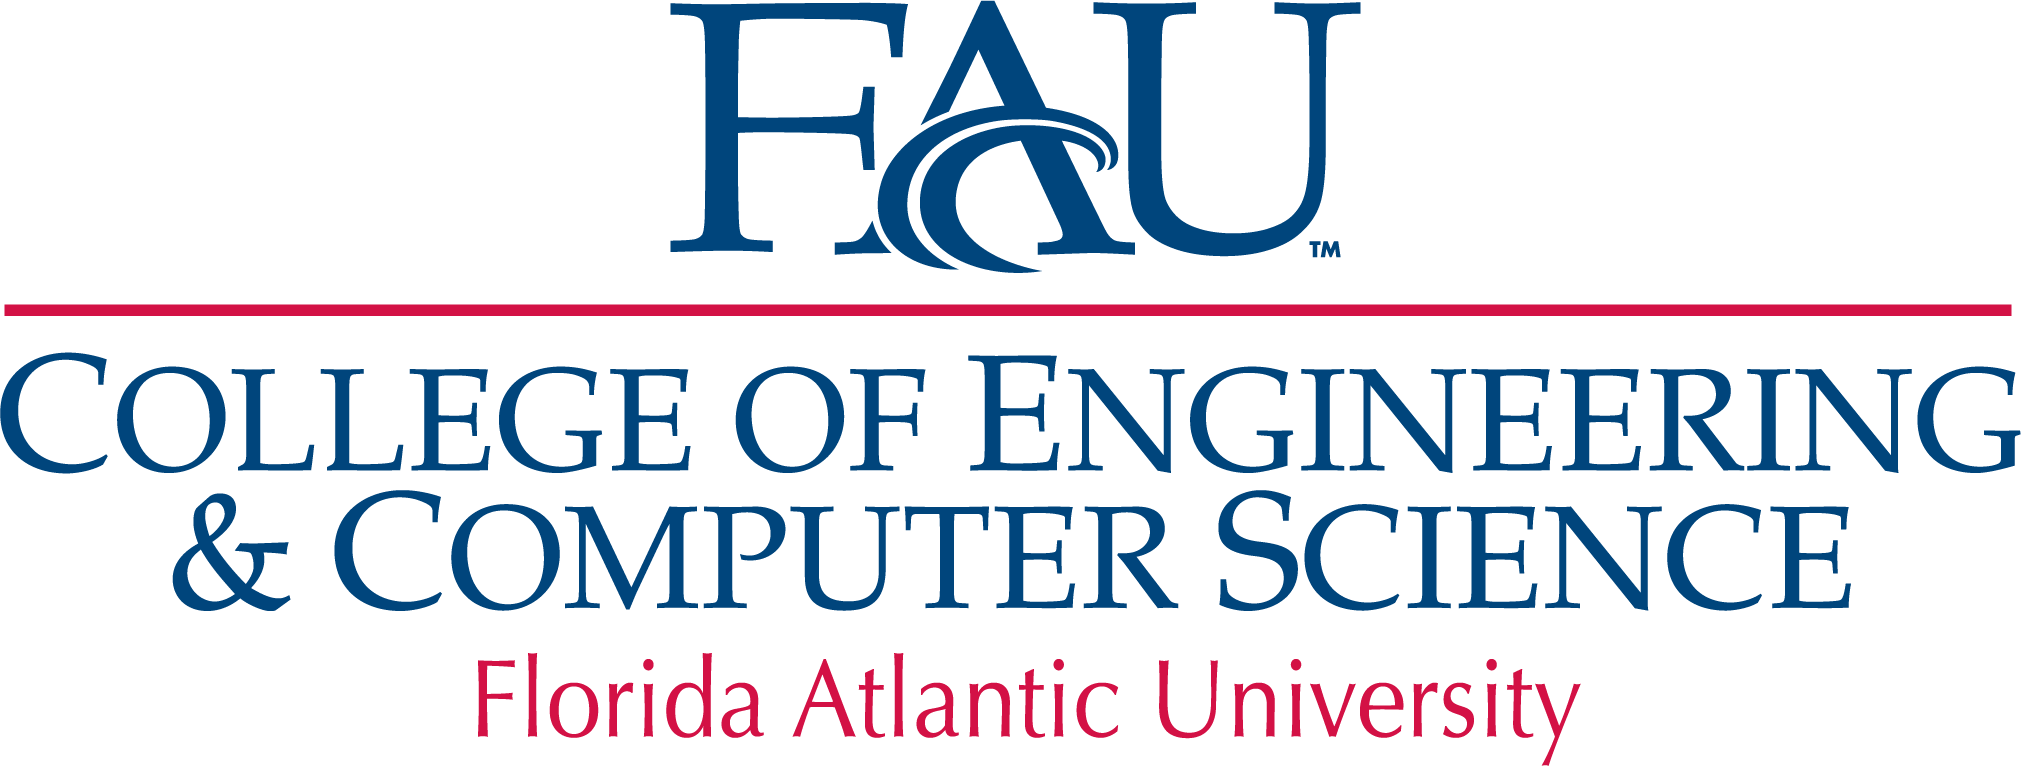 Florida Atlantic University | HPCC Systems